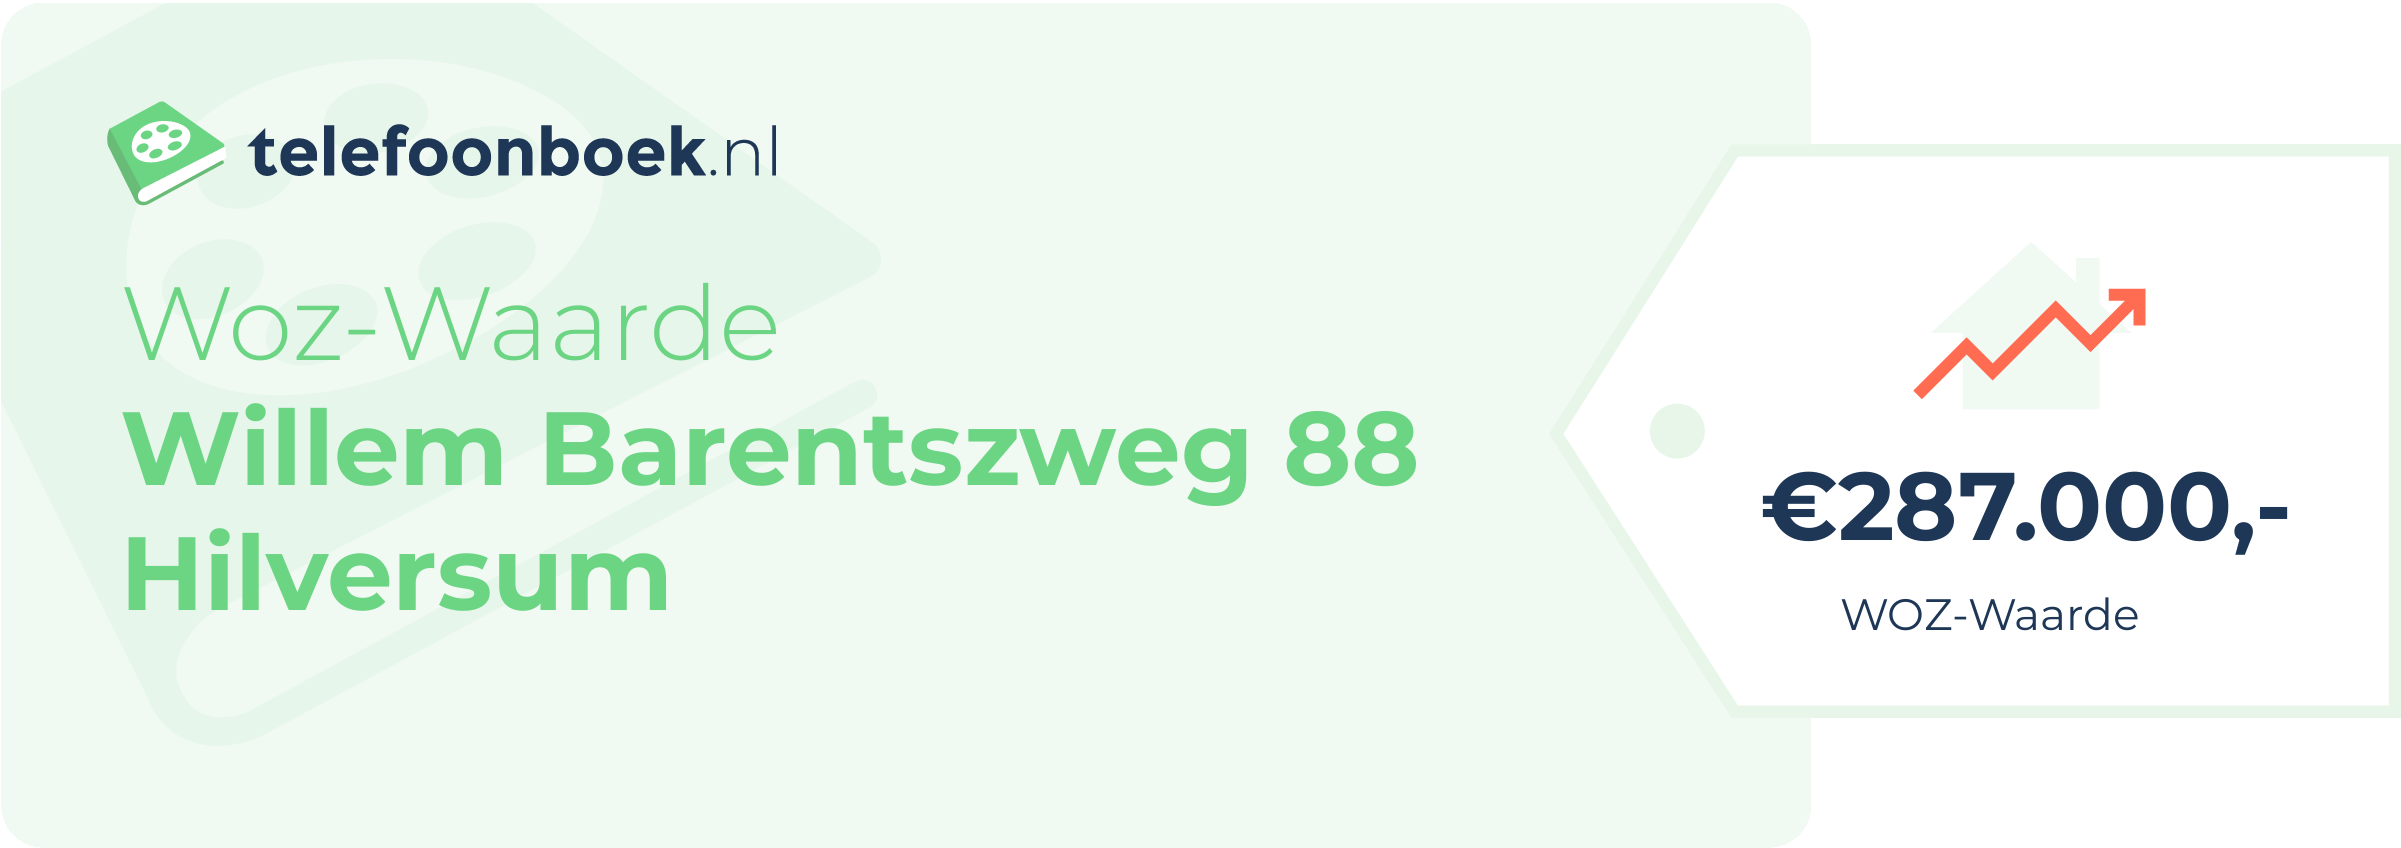 WOZ-waarde Willem Barentszweg 88 Hilversum